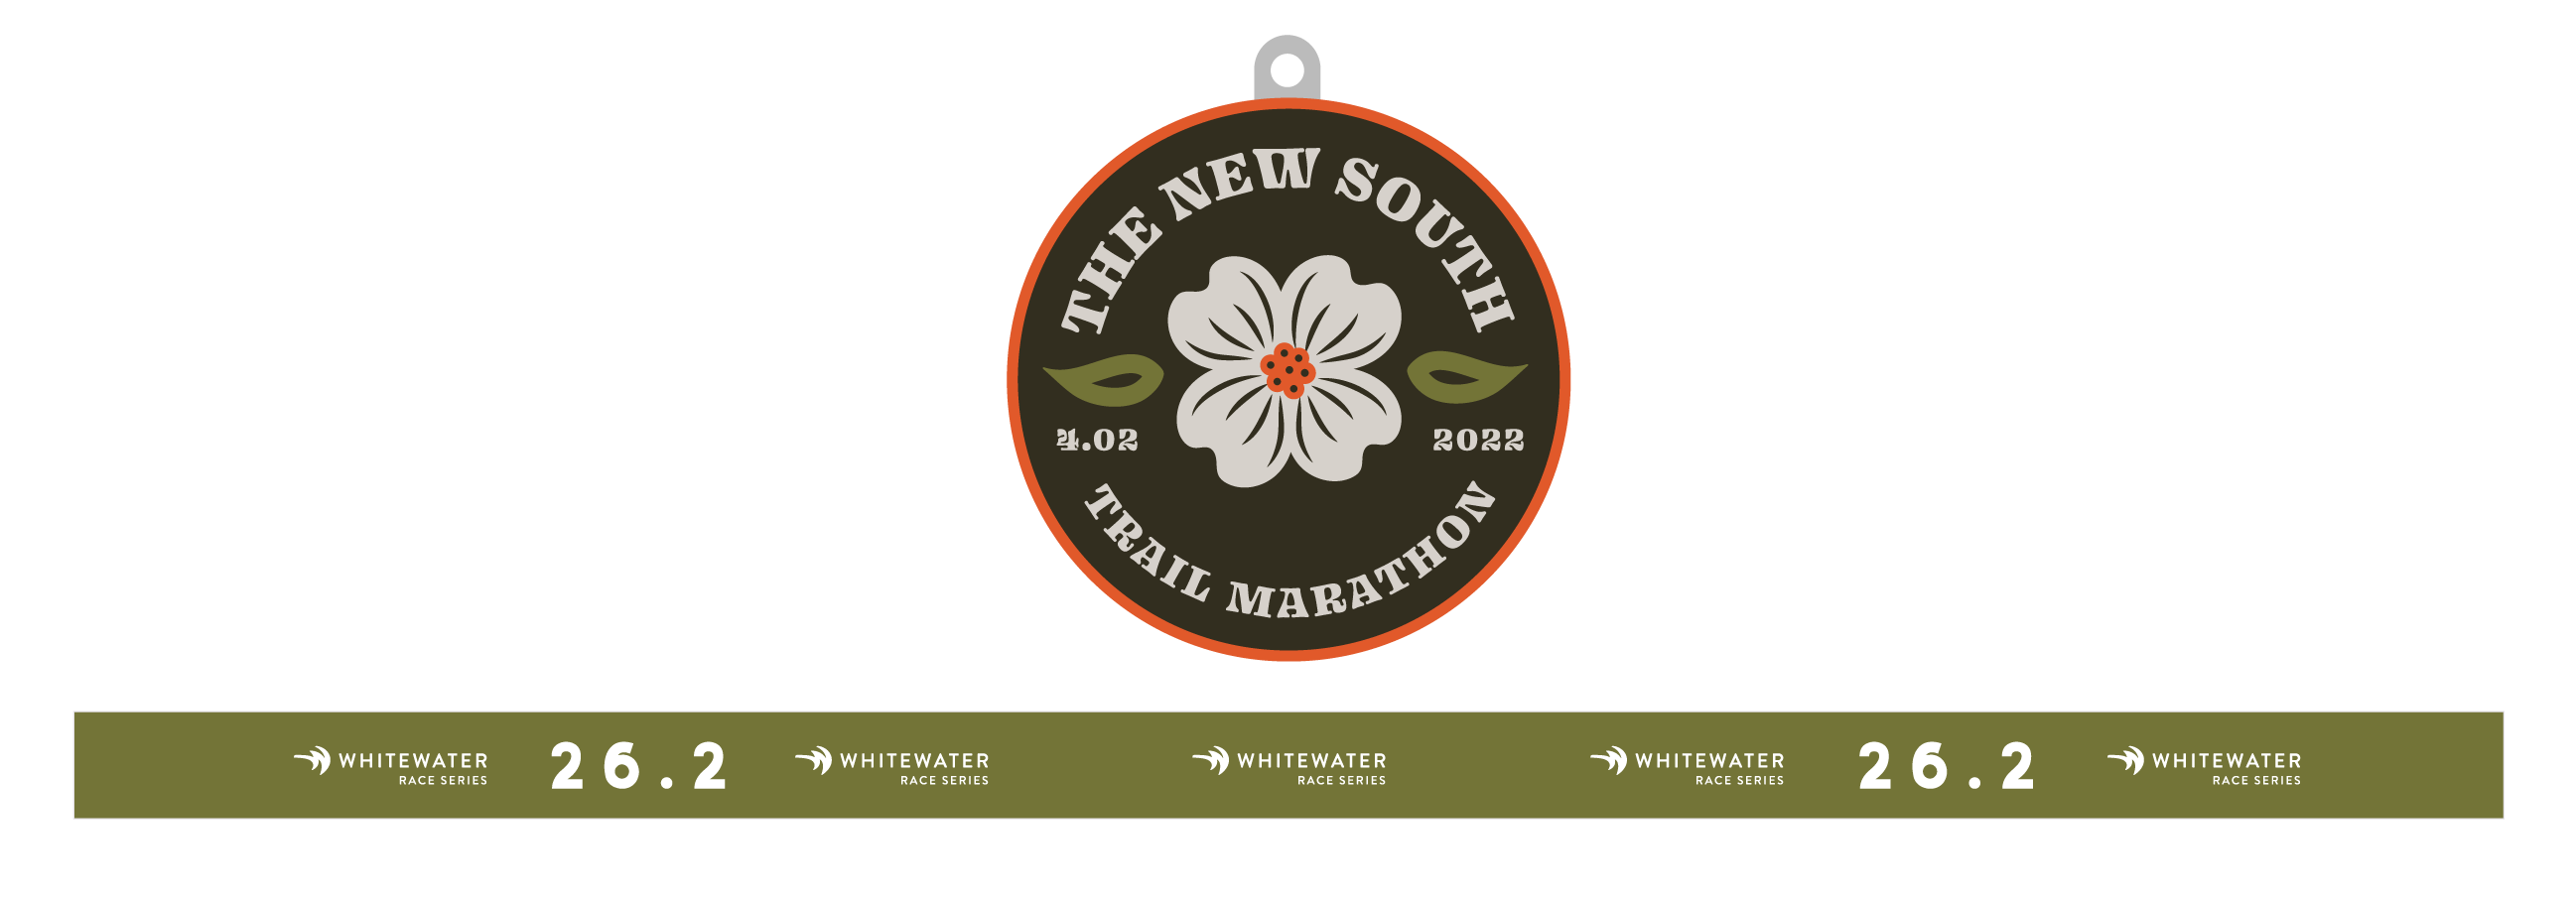 New-South-Trail-Full-Medal-Mockup